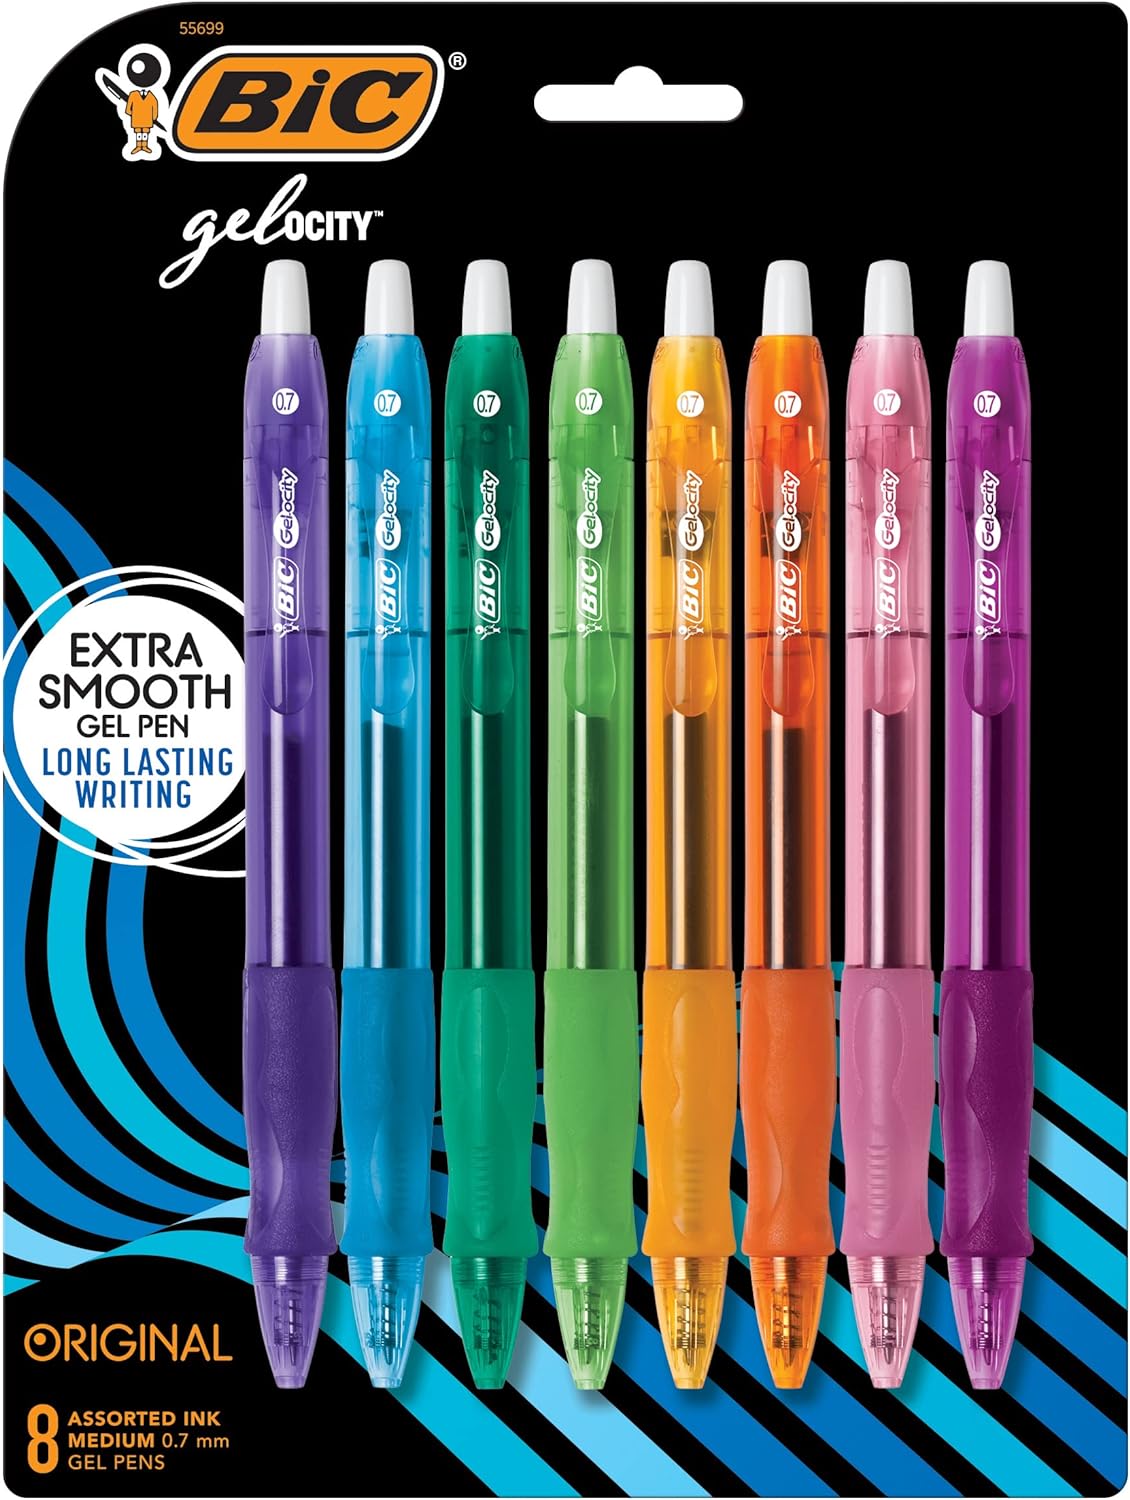 BIC Gelocity Original Long Lasting Fashion Gel Pens, Medium Point (0.7mm) Assorted Ink, 8-Count Pack (RLCAP81-AST)